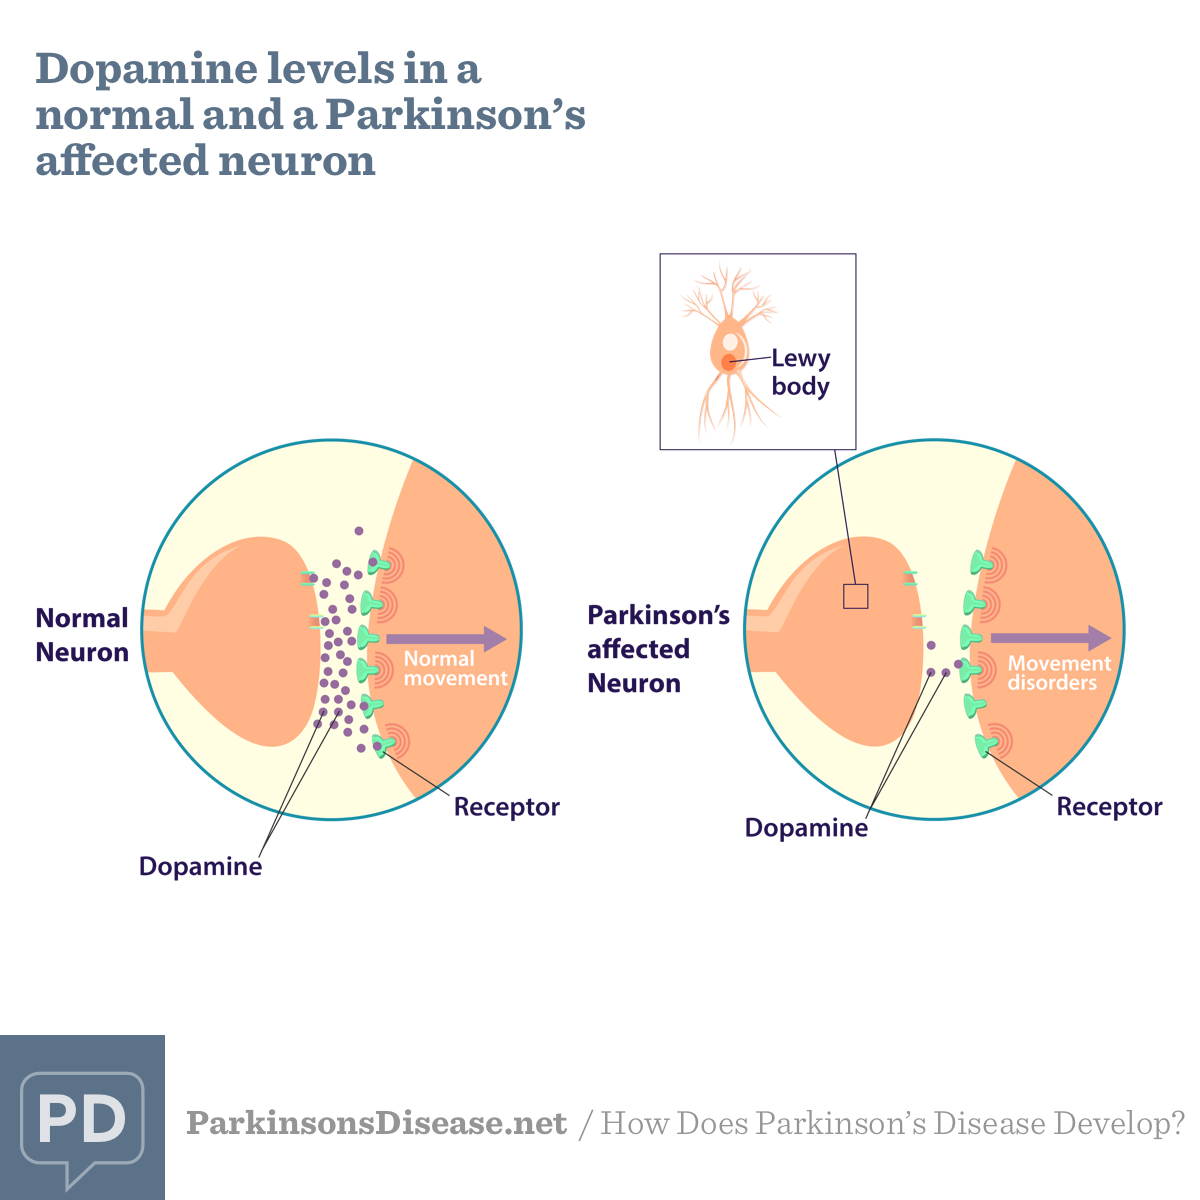 Parkinson's disease and dopamine